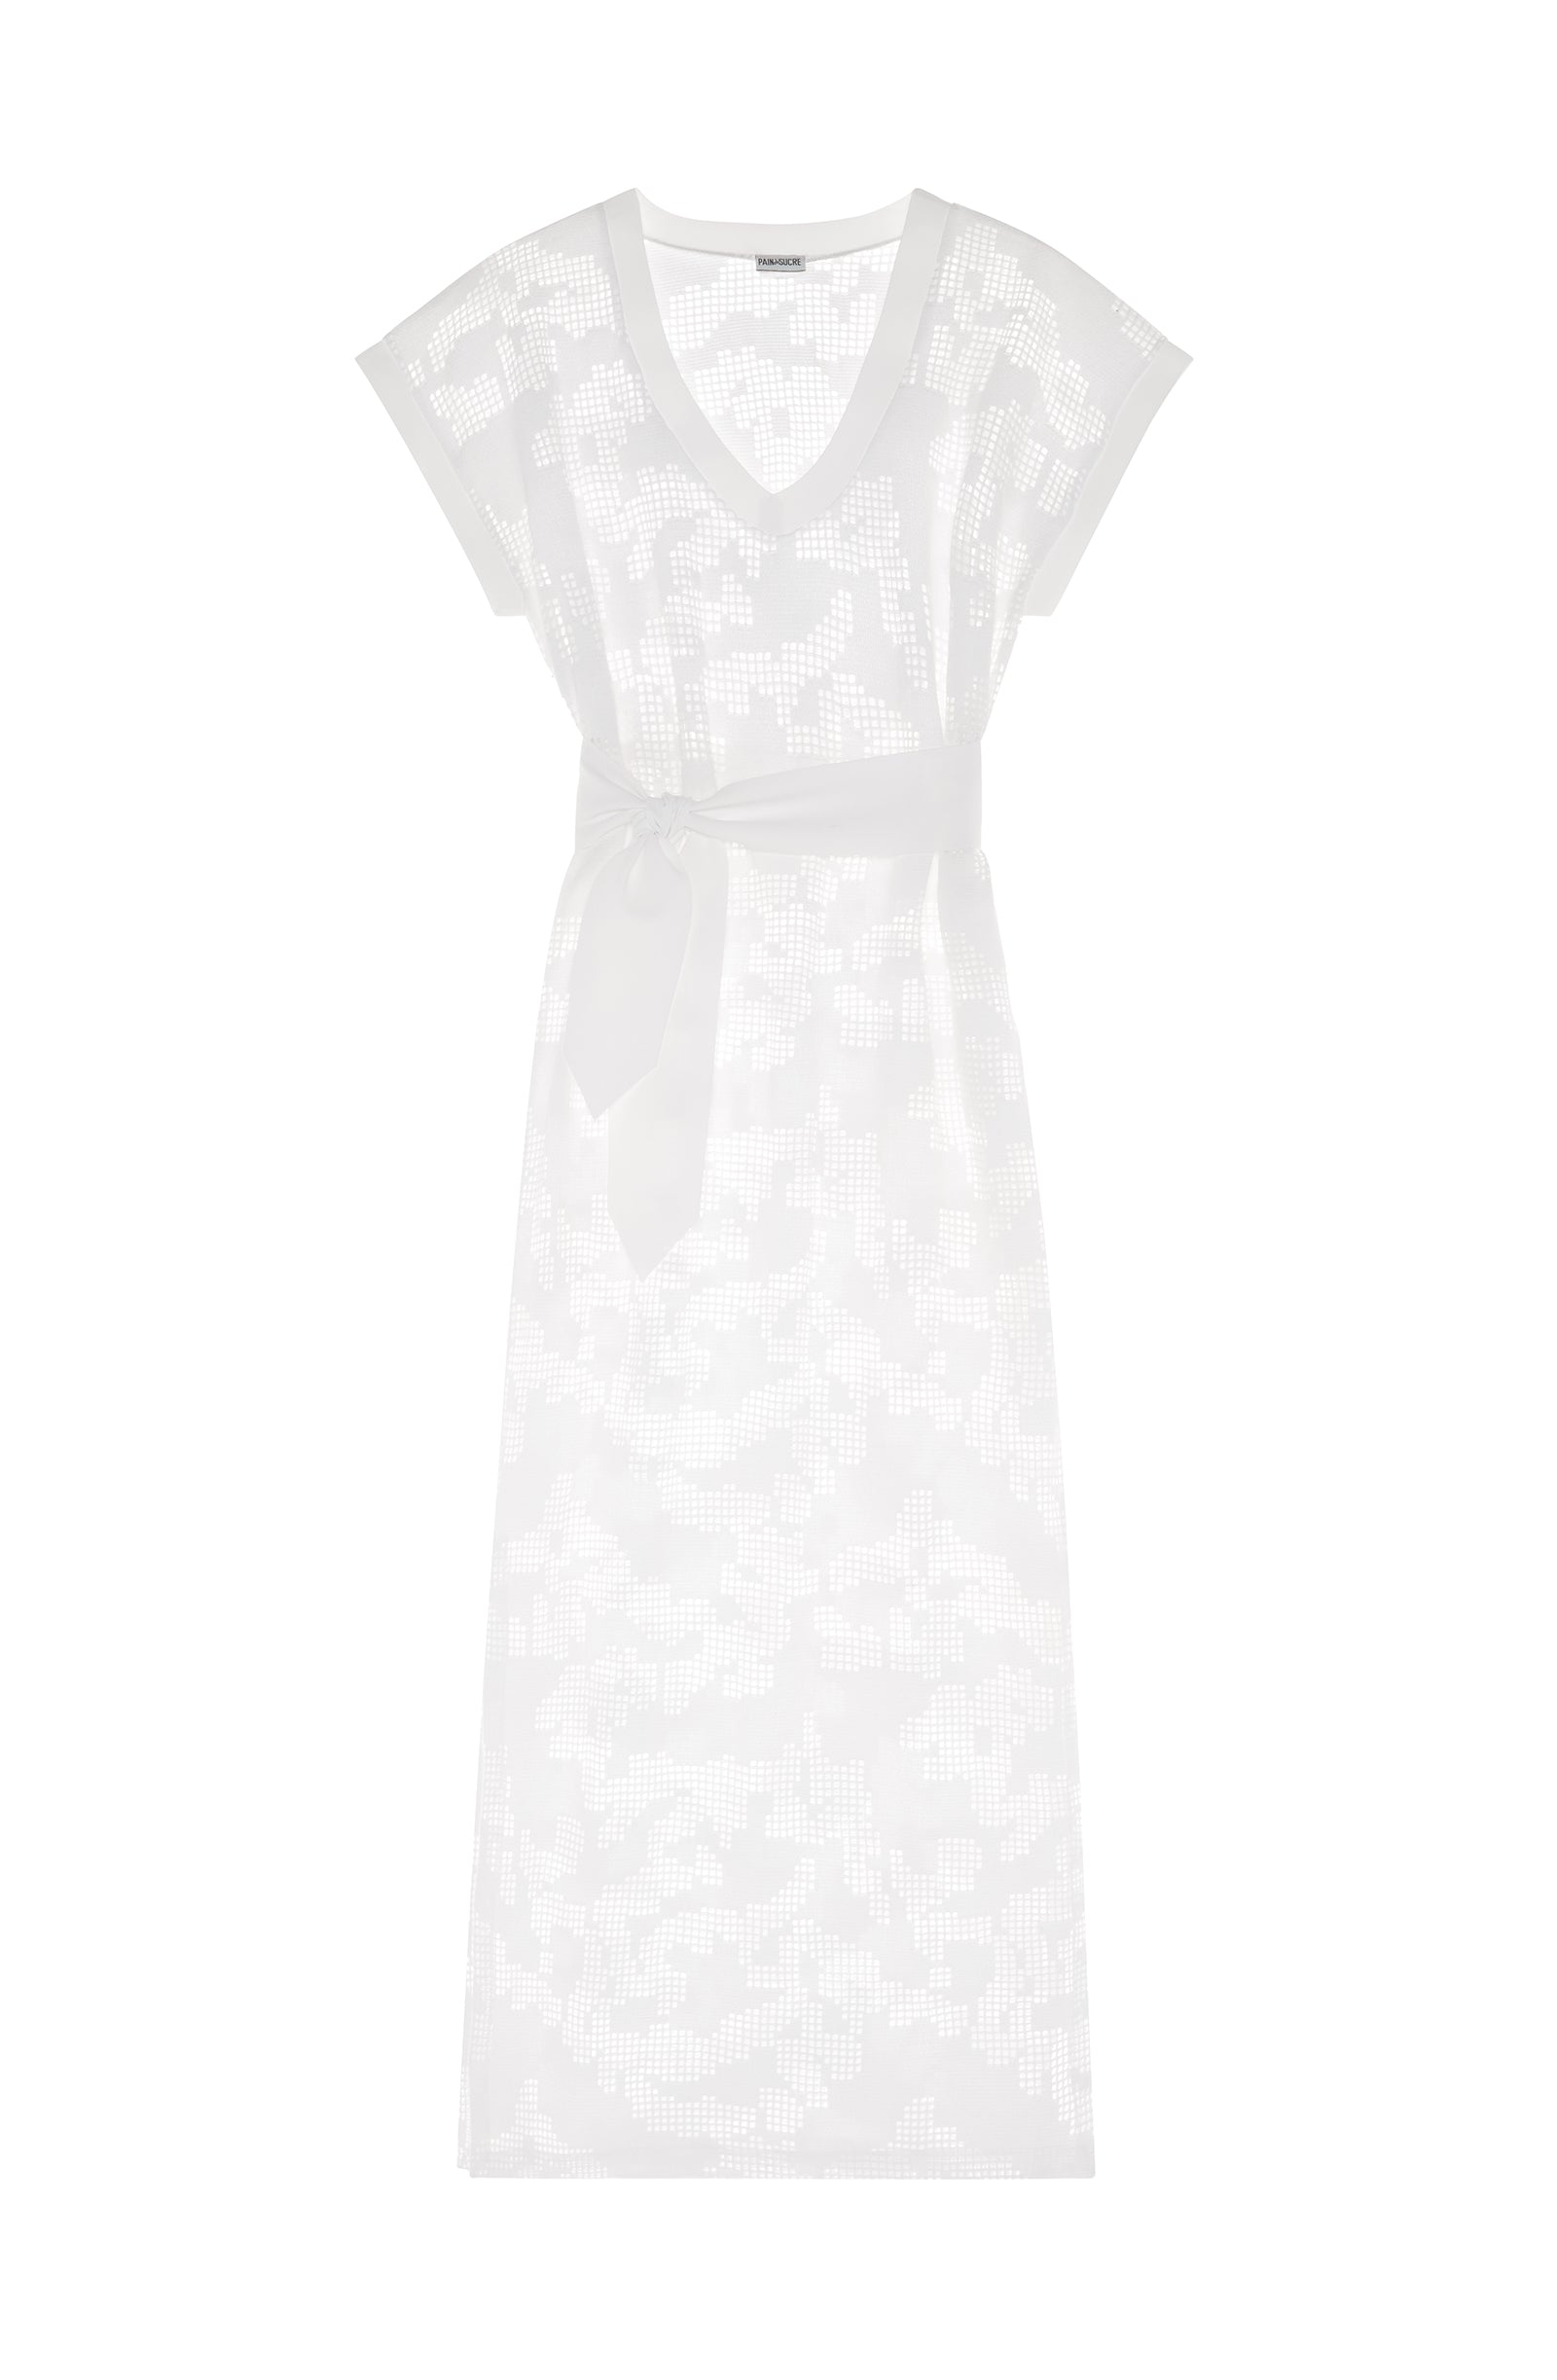 raina - Long white perforated dress